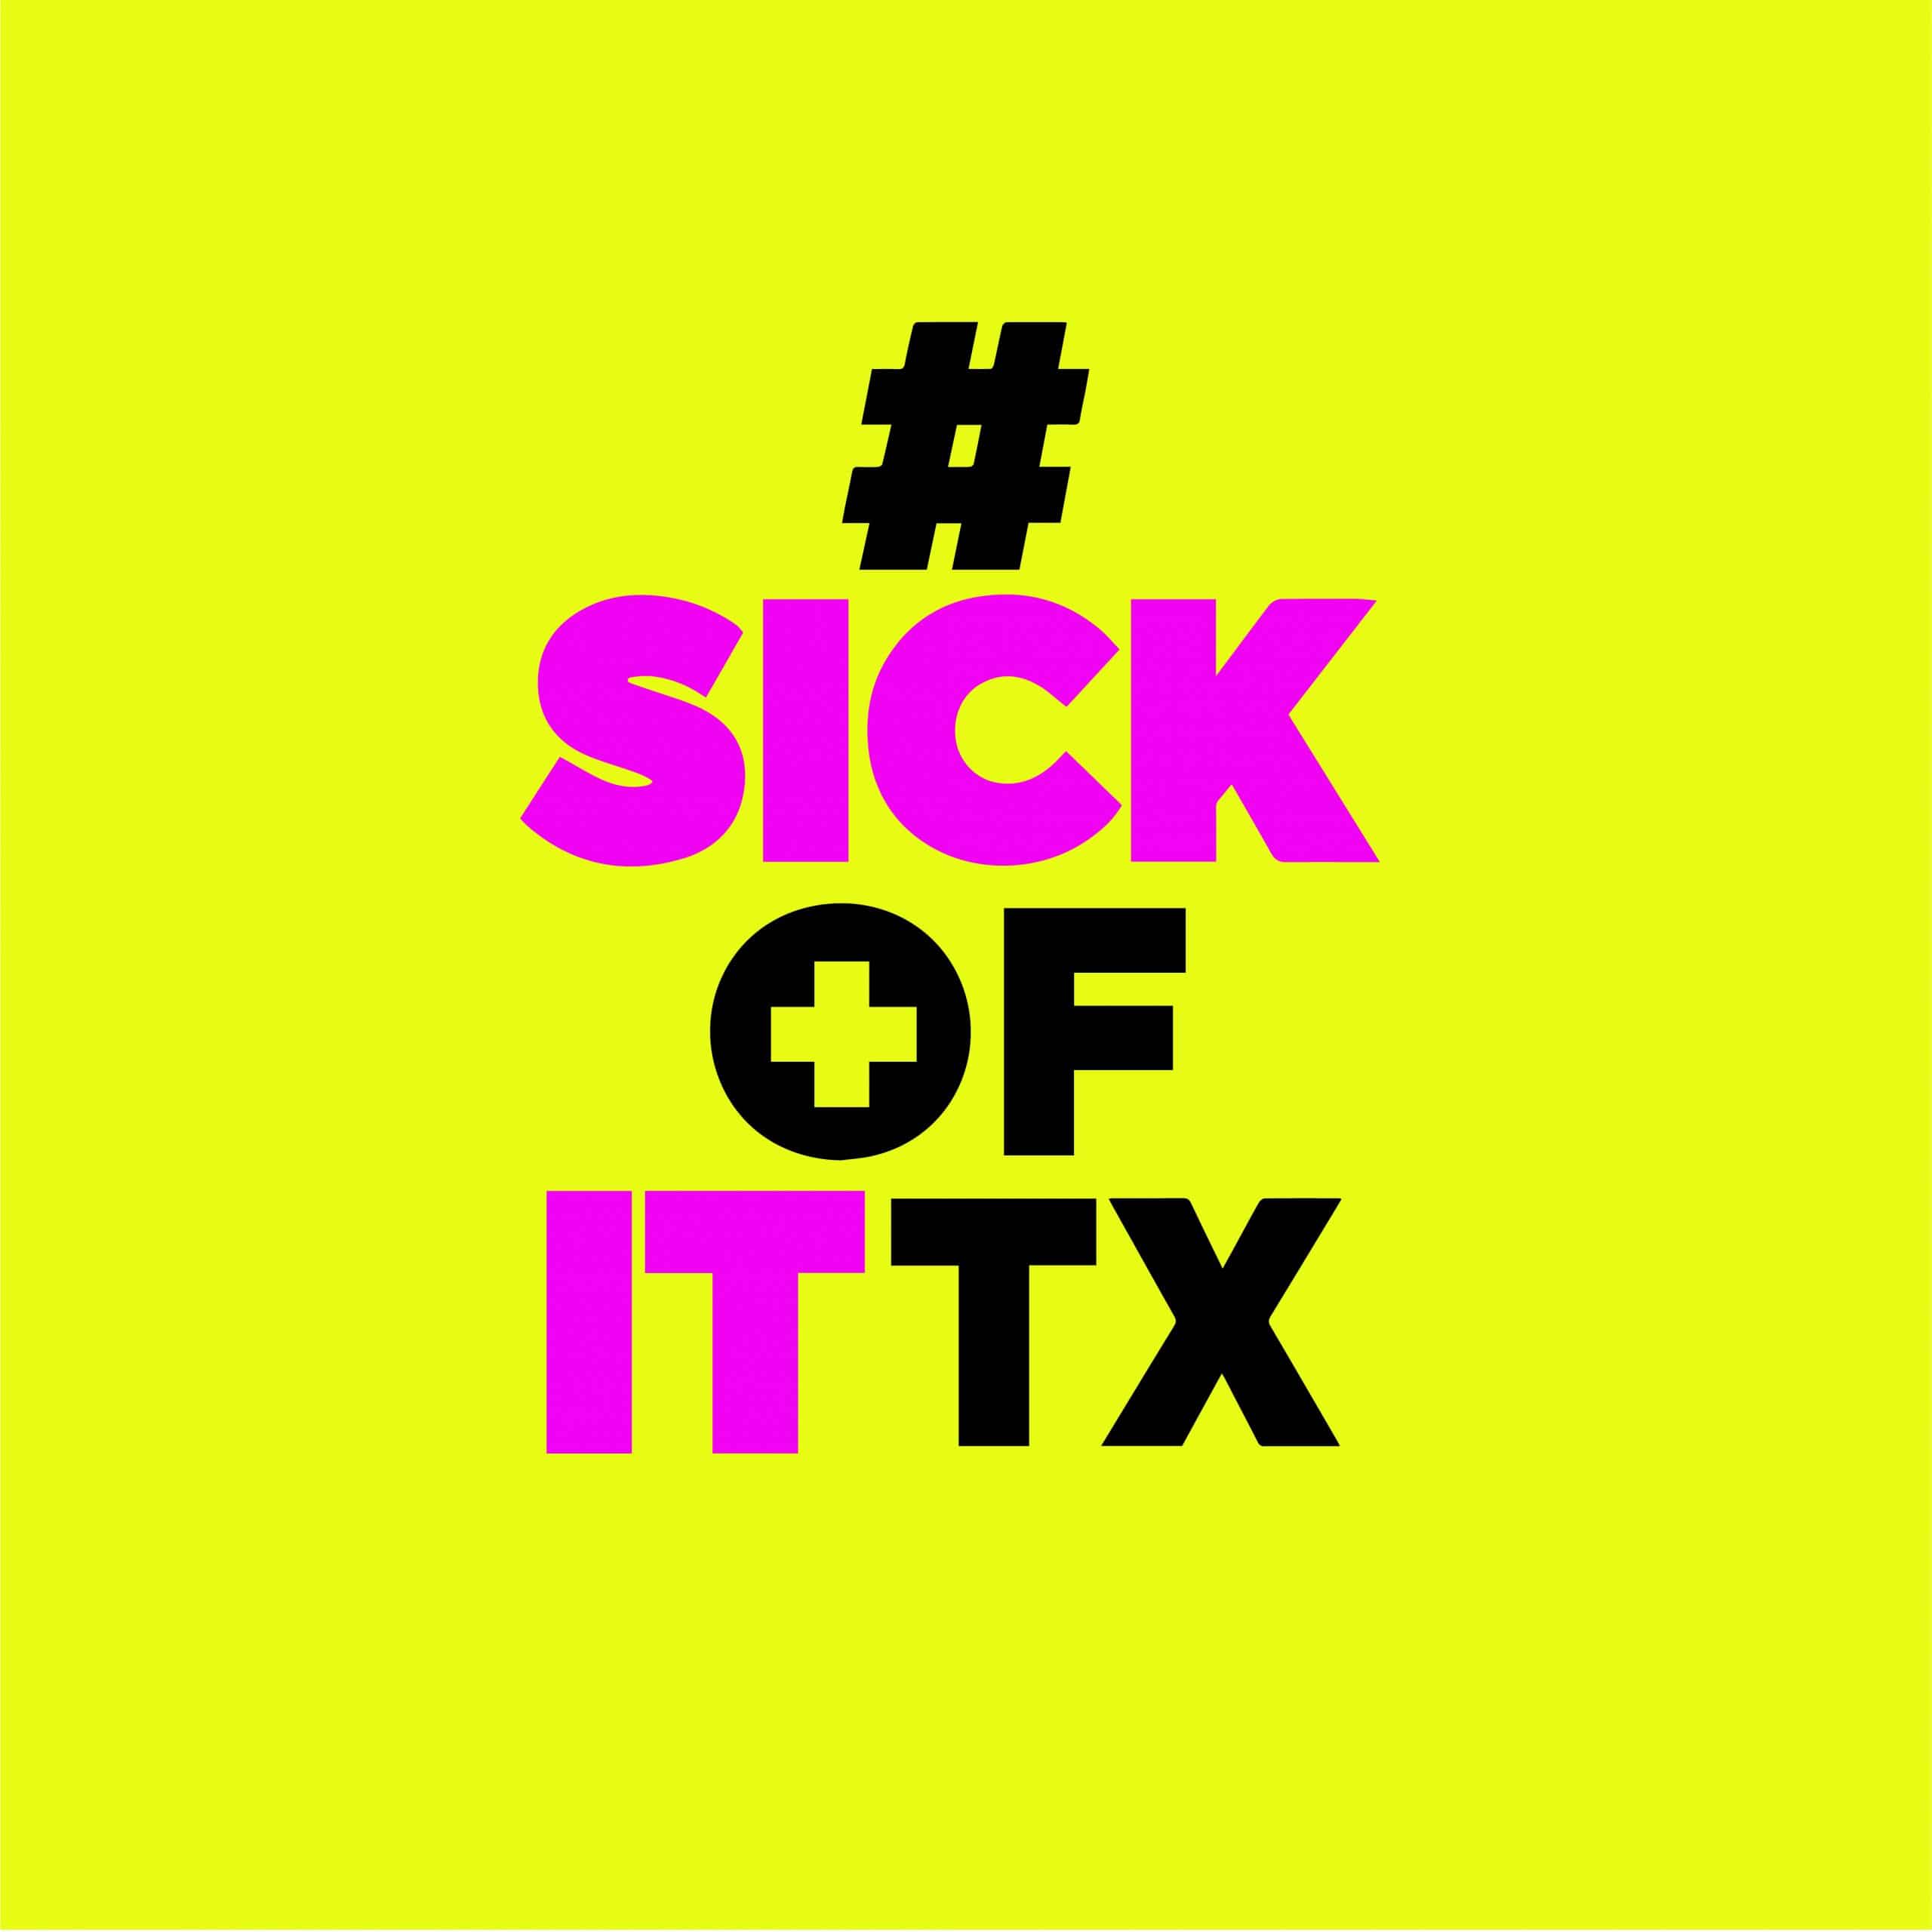 Sick of It Texas Logo Image